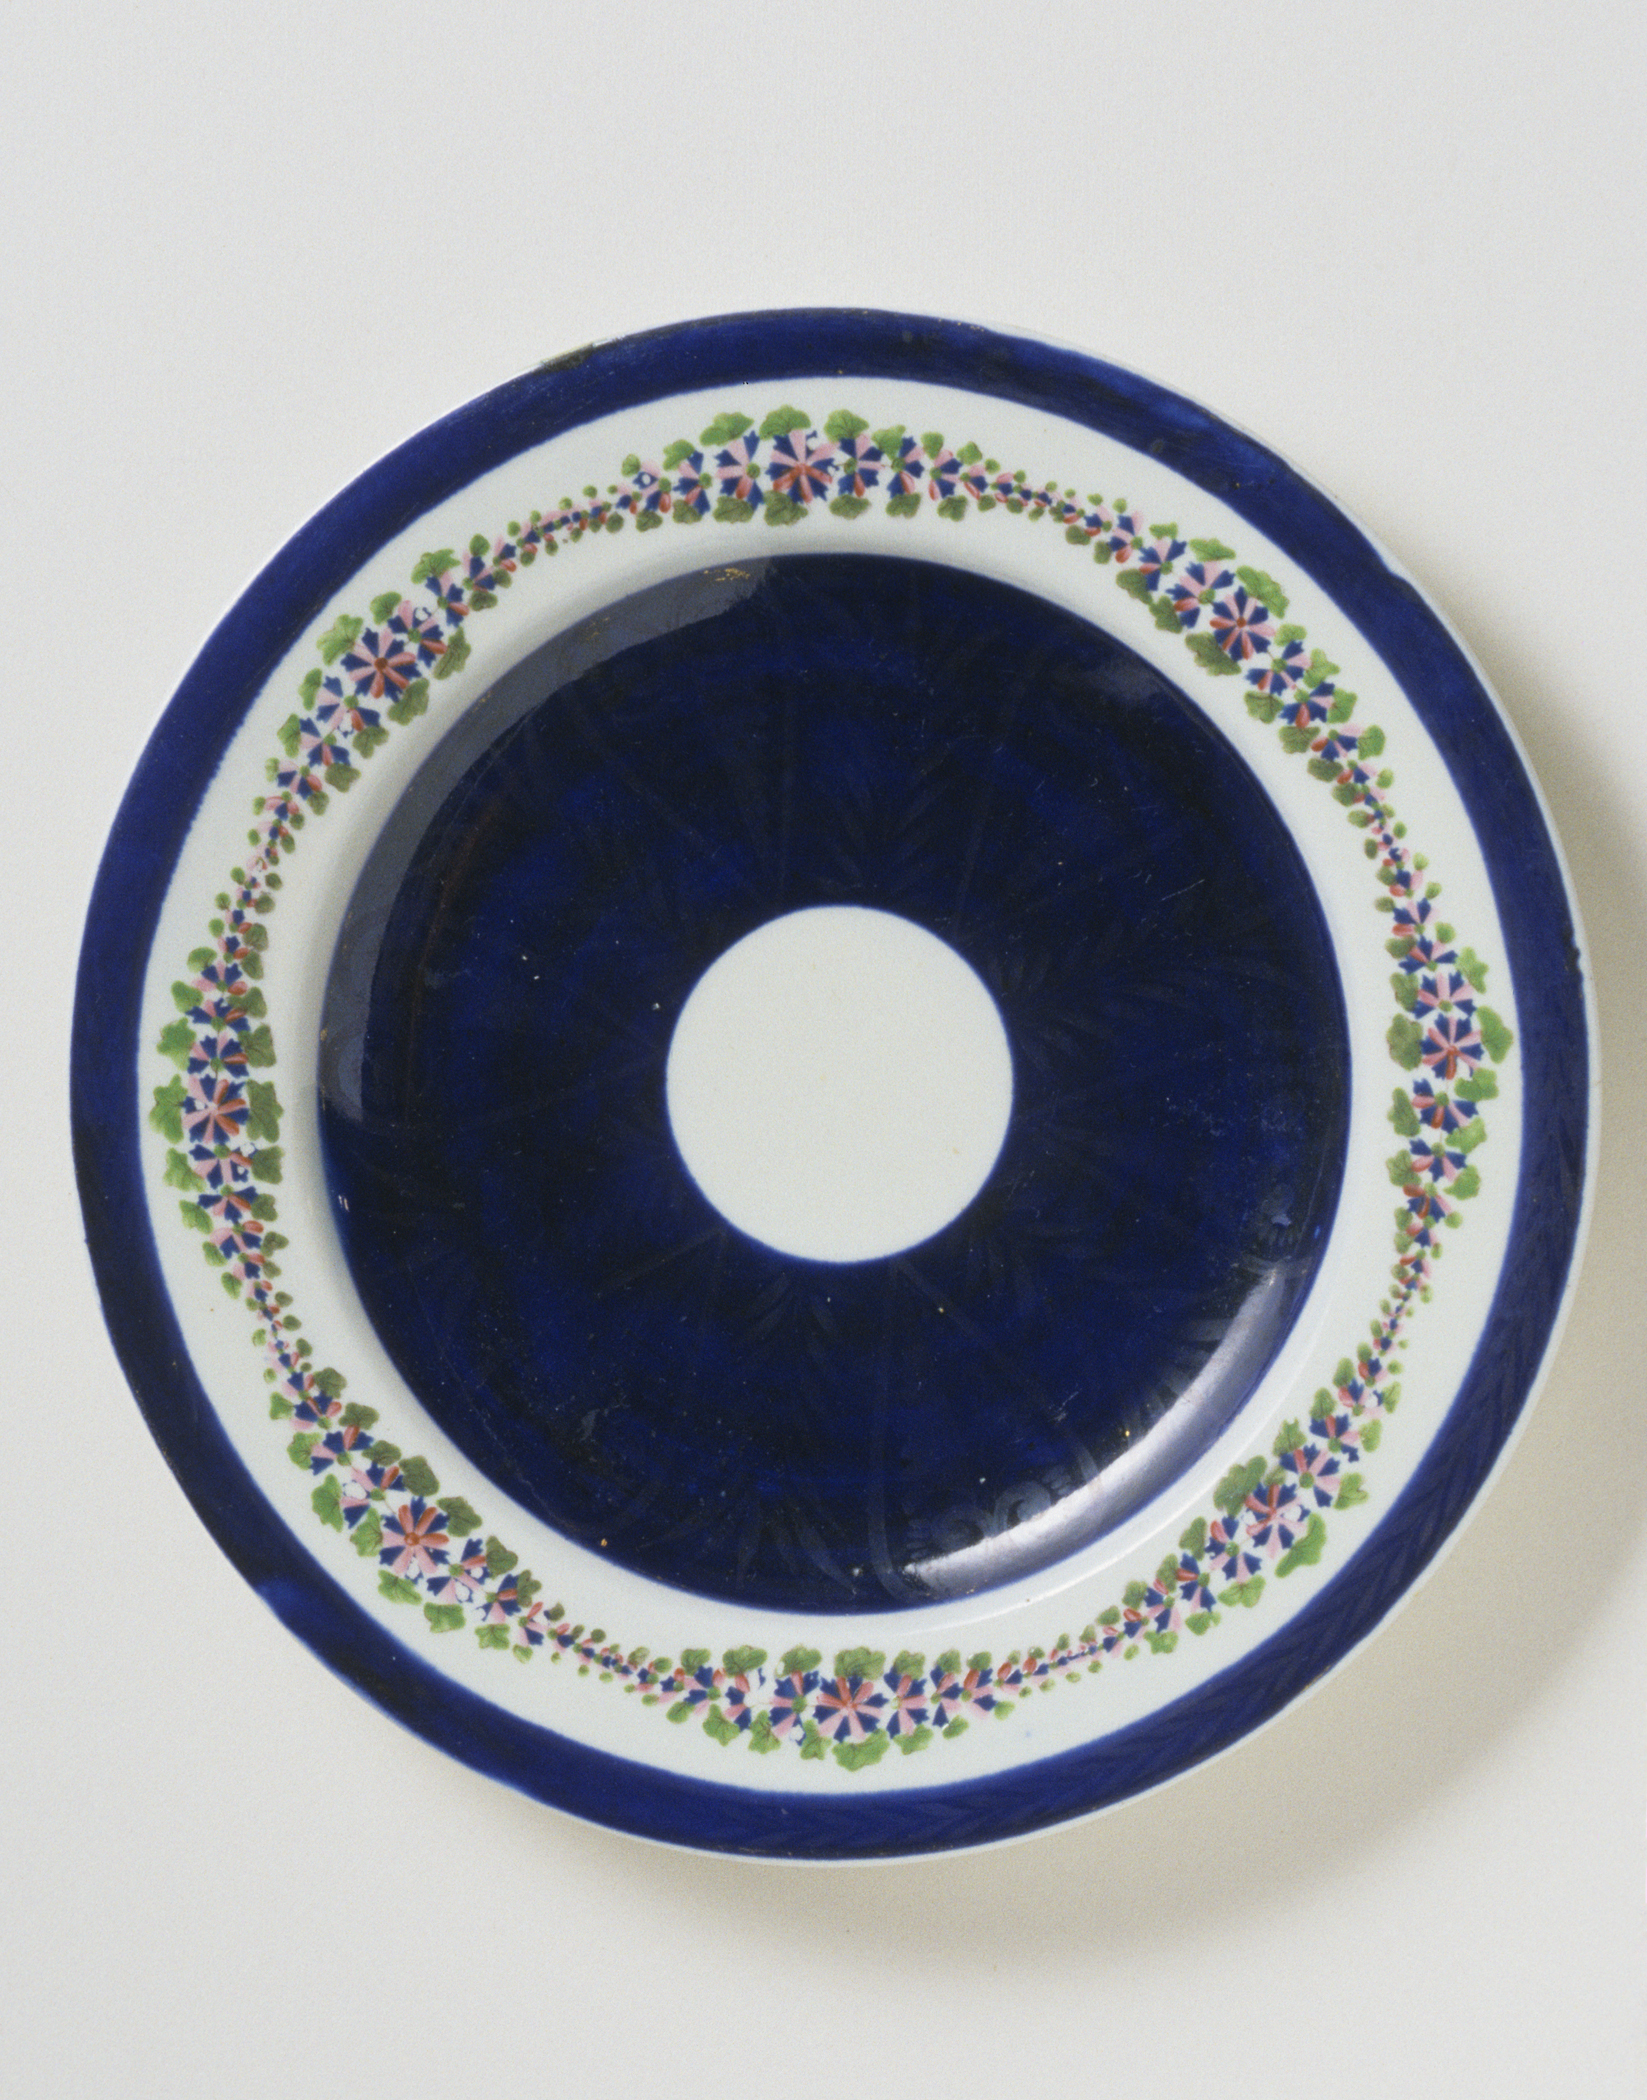 1972.0434 Porcelain plate